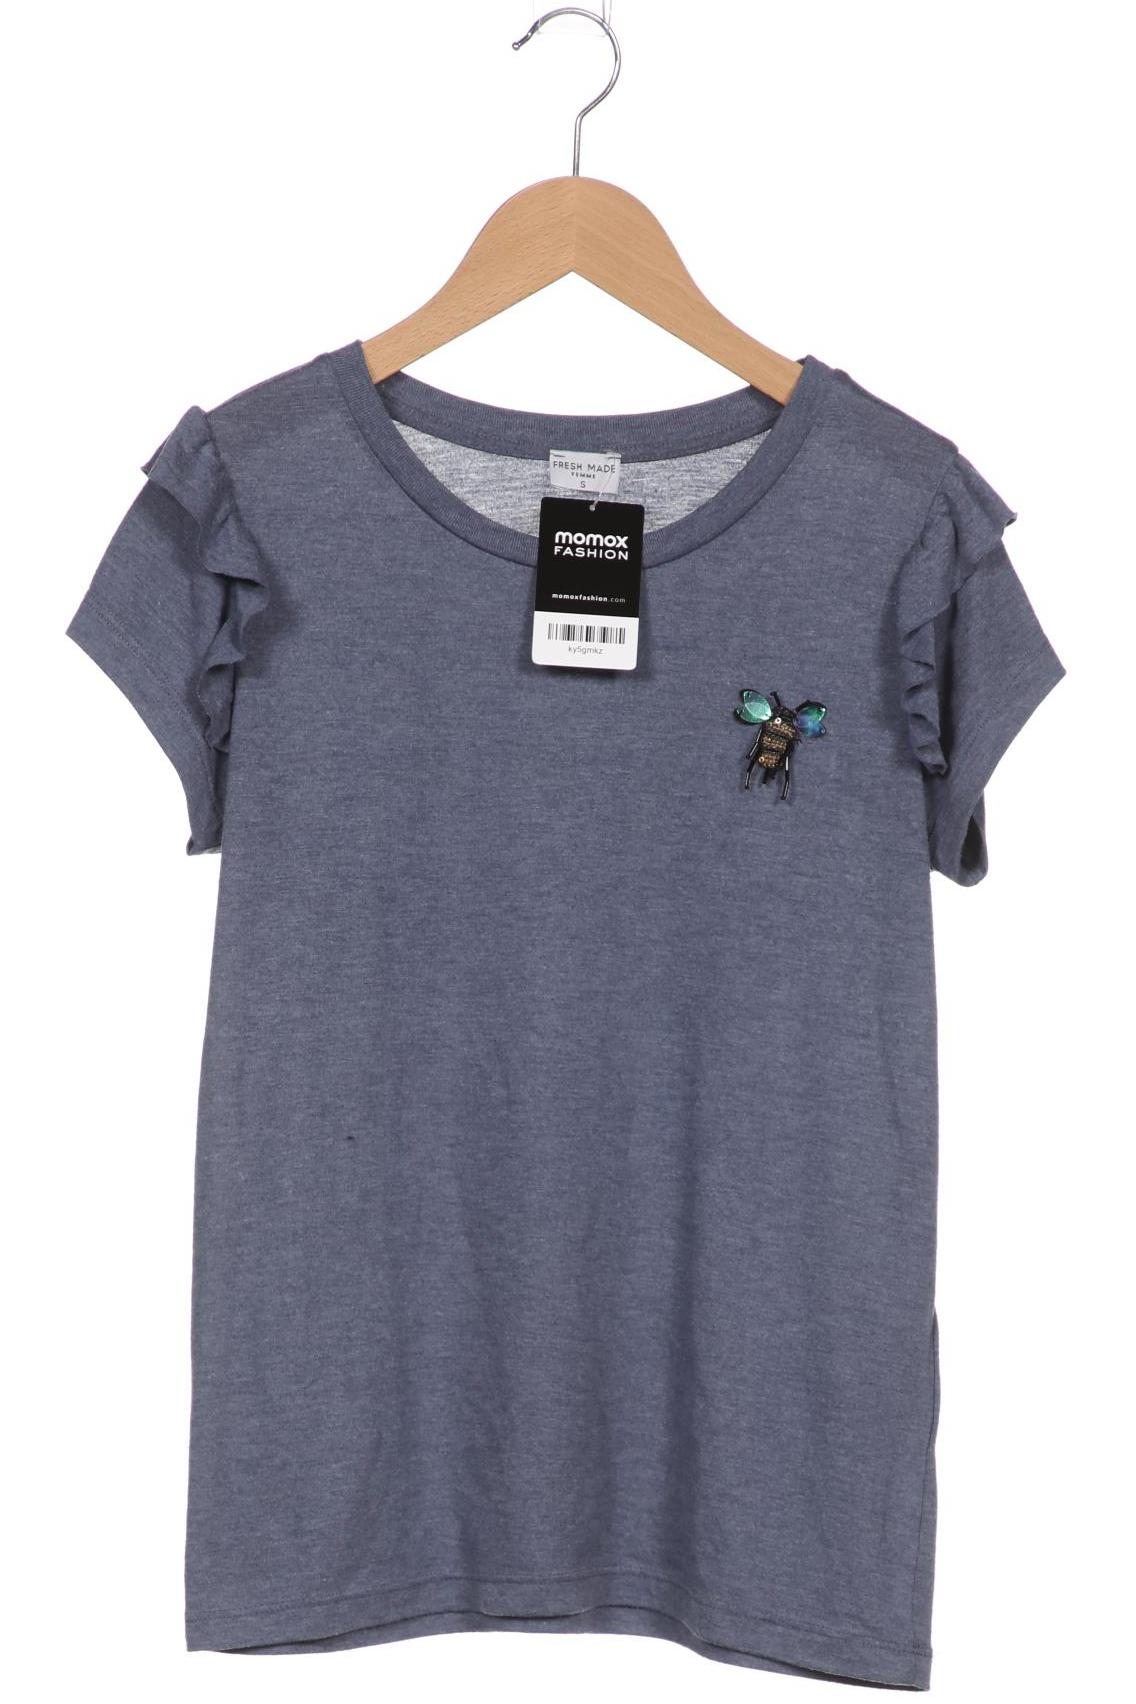 Fresh Made Damen T-Shirt, marineblau, Gr. 36 von Fresh Made